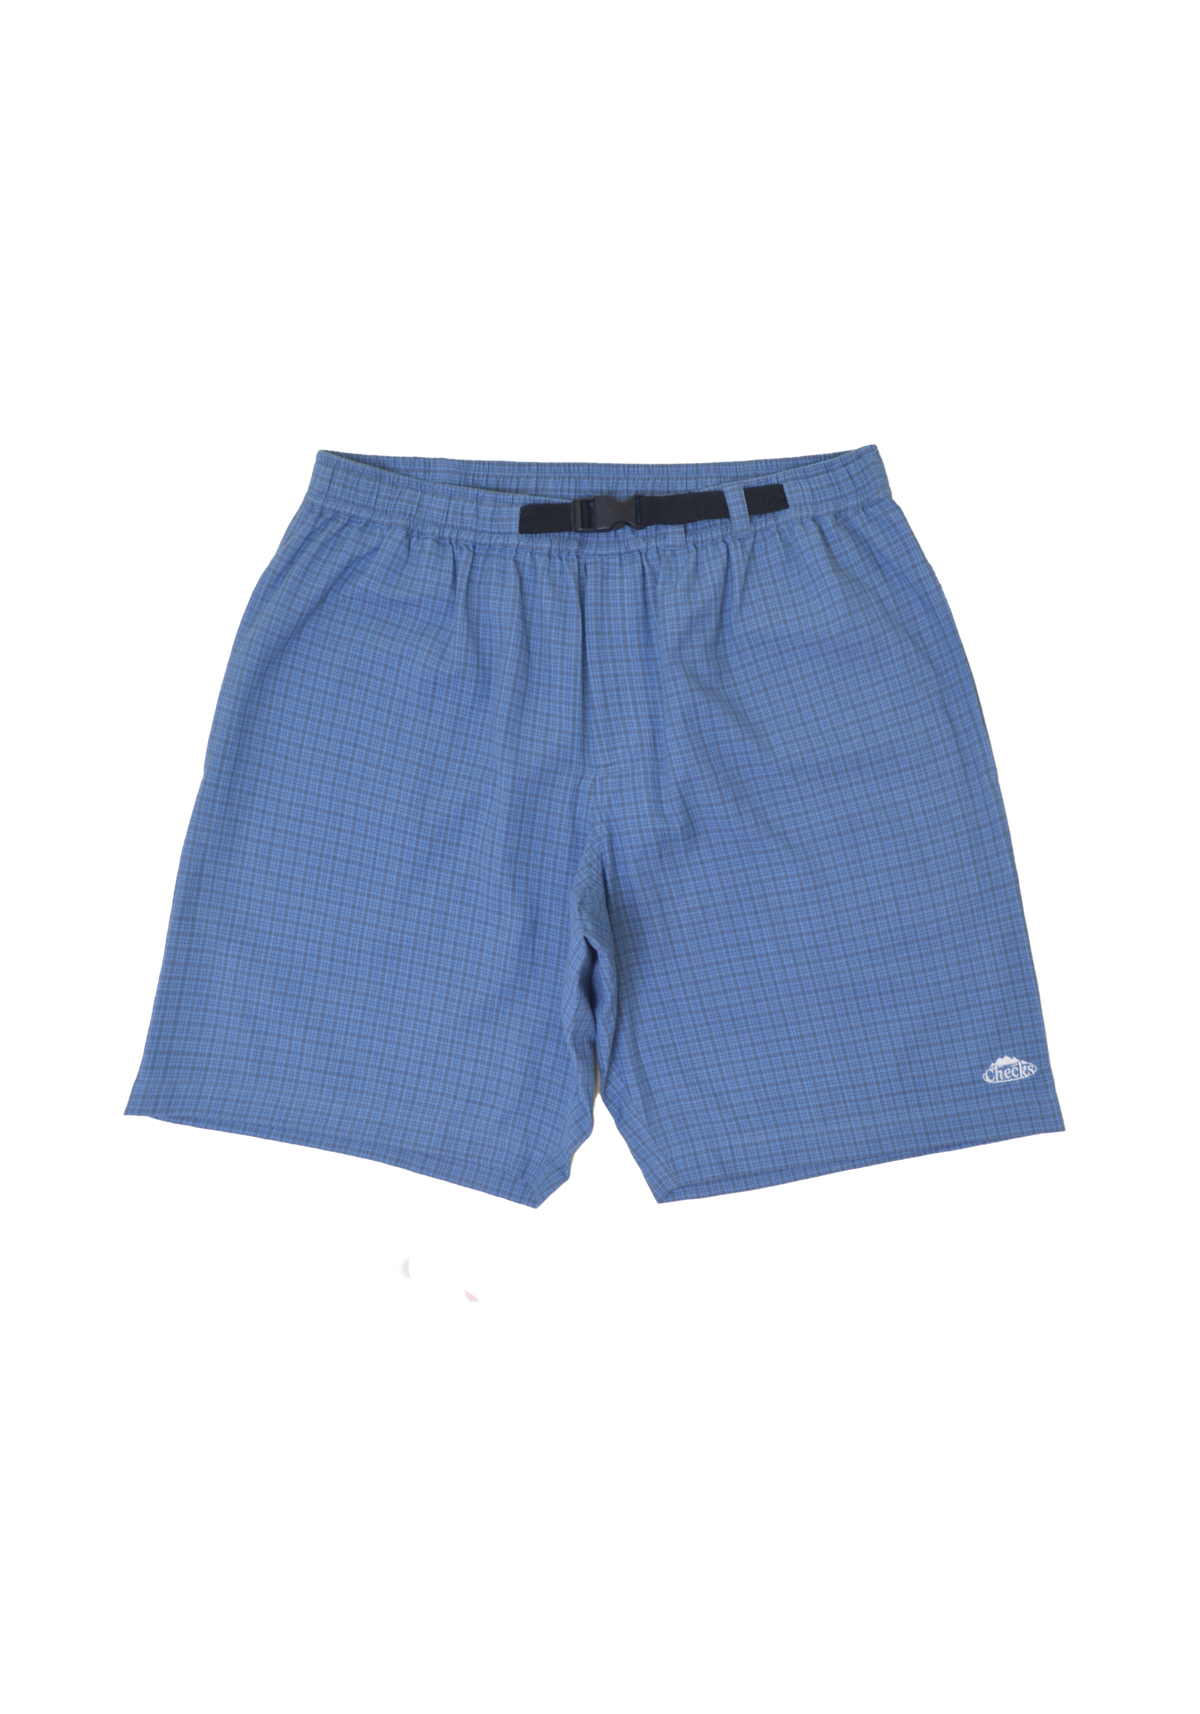 Small Plaid Climbing Shorts Blue/Graphite | CHECKS DOWNTOWN